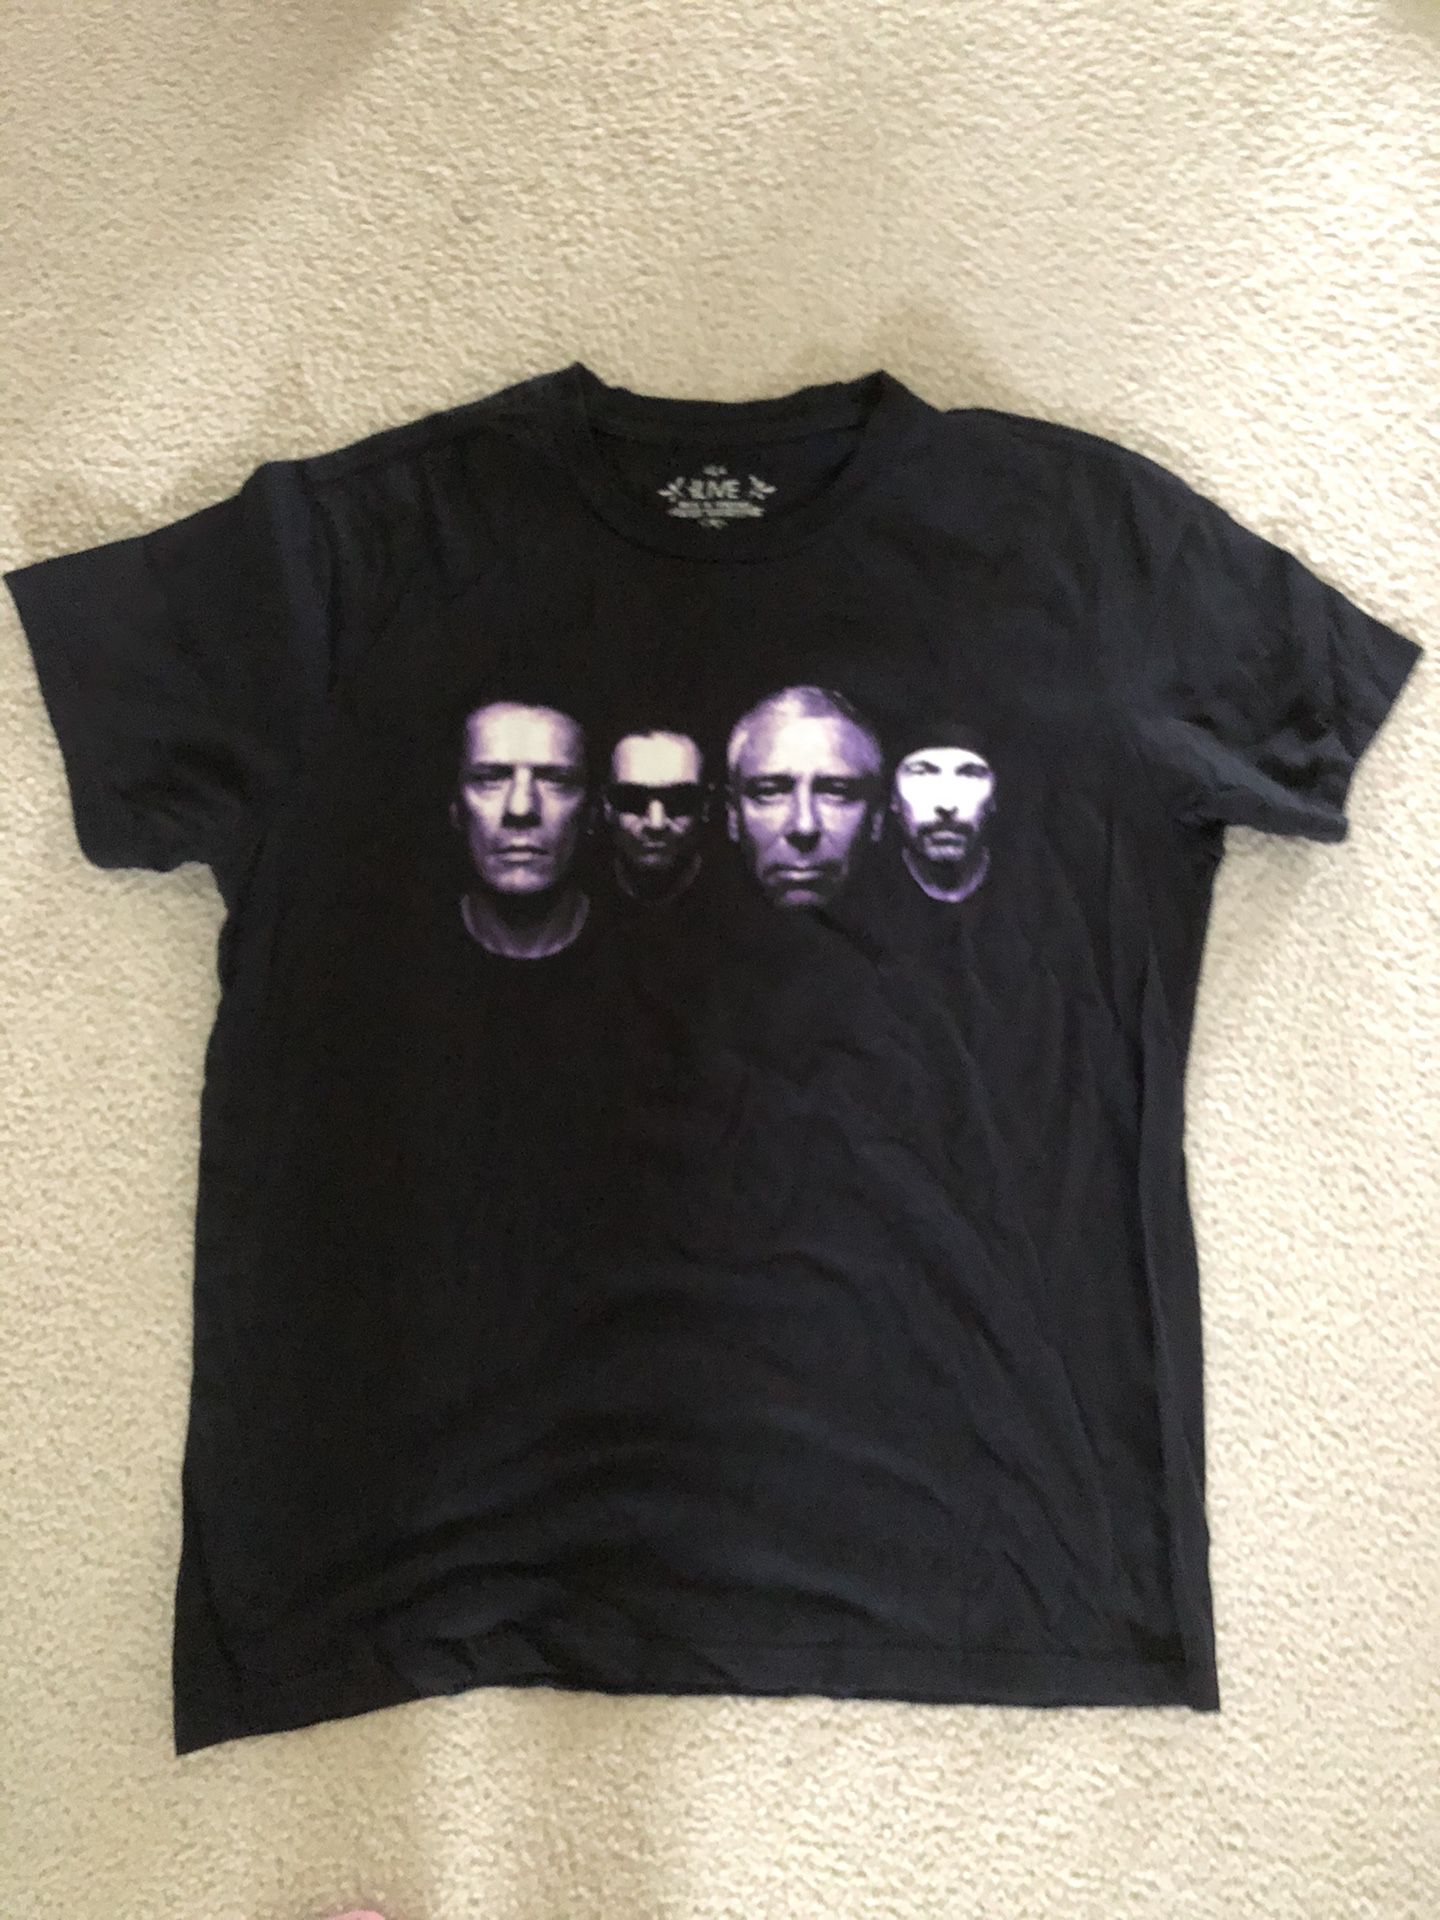 U2 360 Tour Black Shirt large 